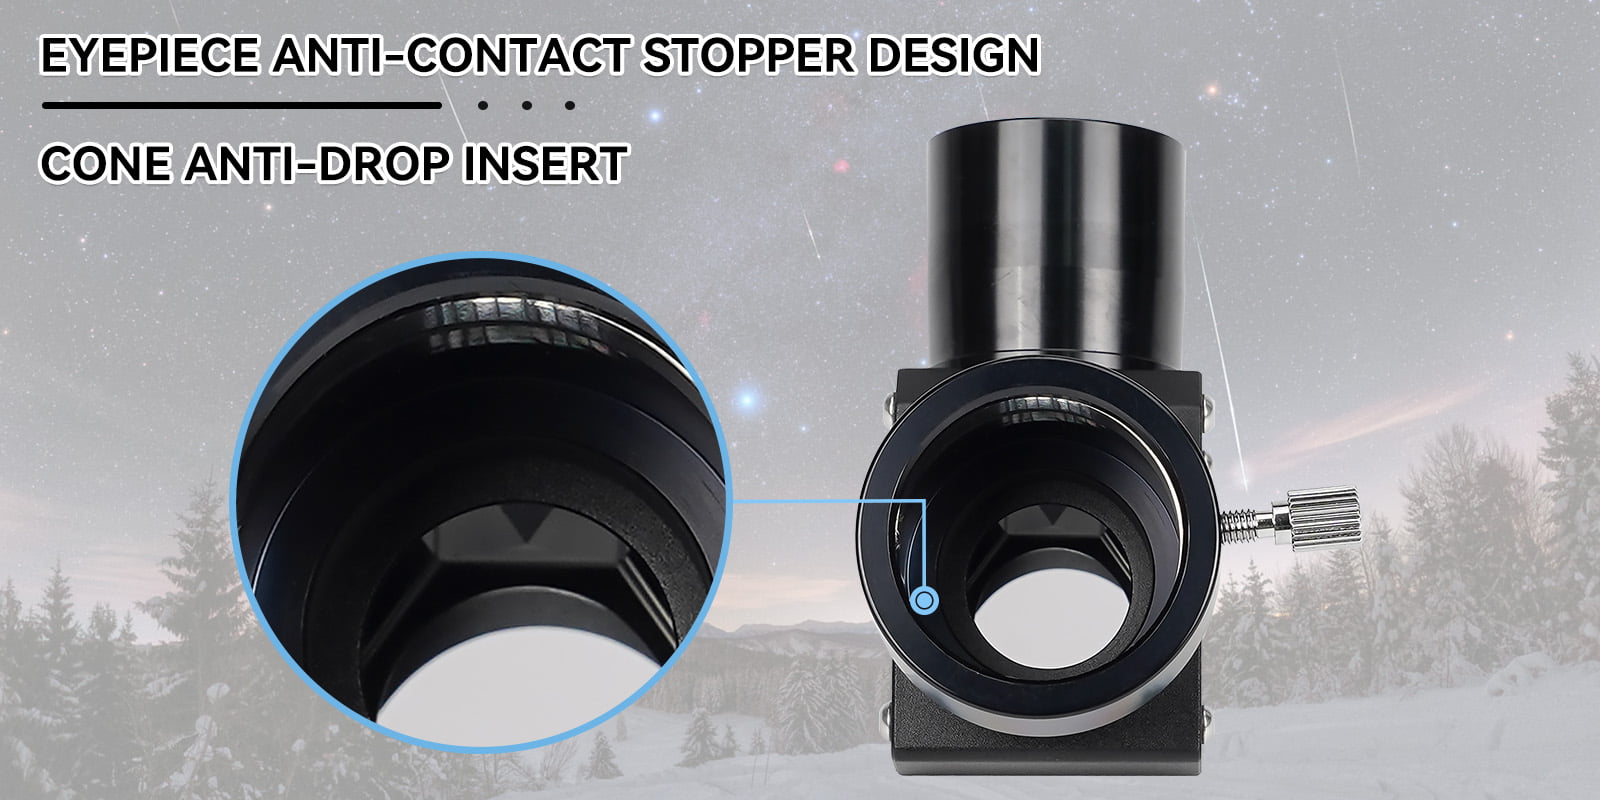 sv222 eyepiect anti-contact stopper design 15.jpg